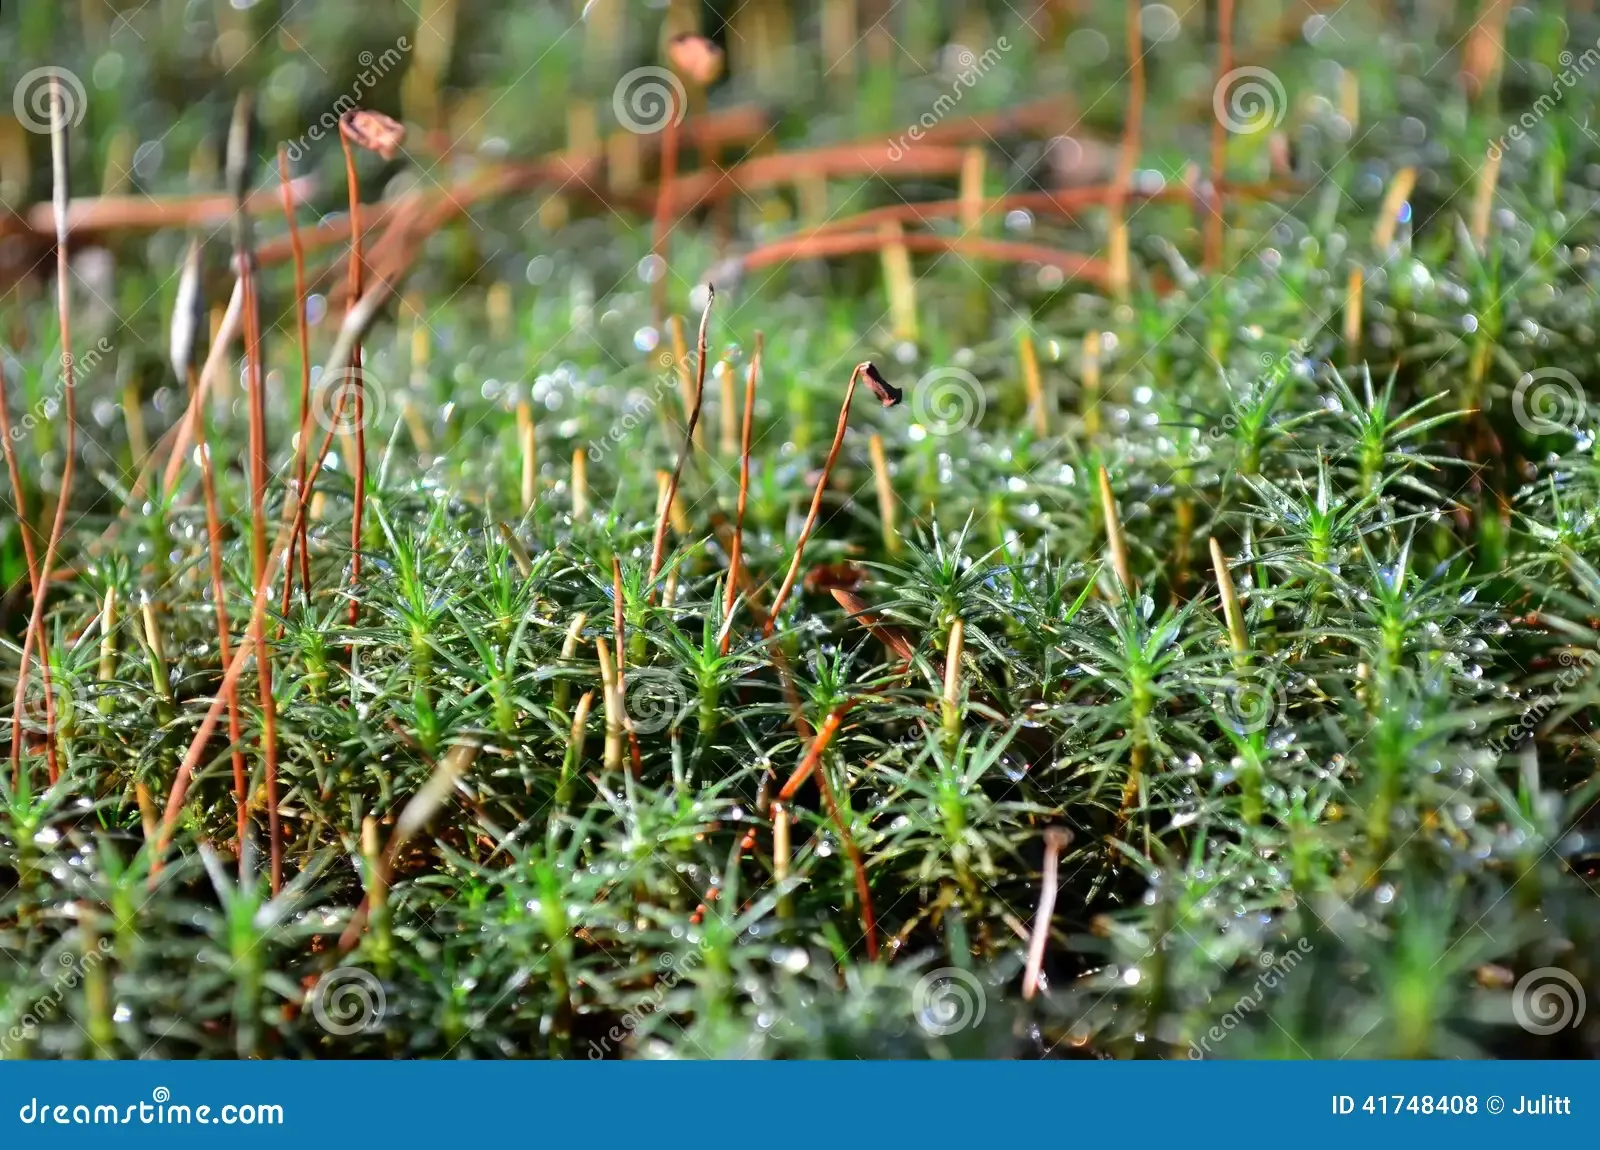 green-moss-polytrichum-commune-autumn-forest-shallow-depth-field-41748408.jpg